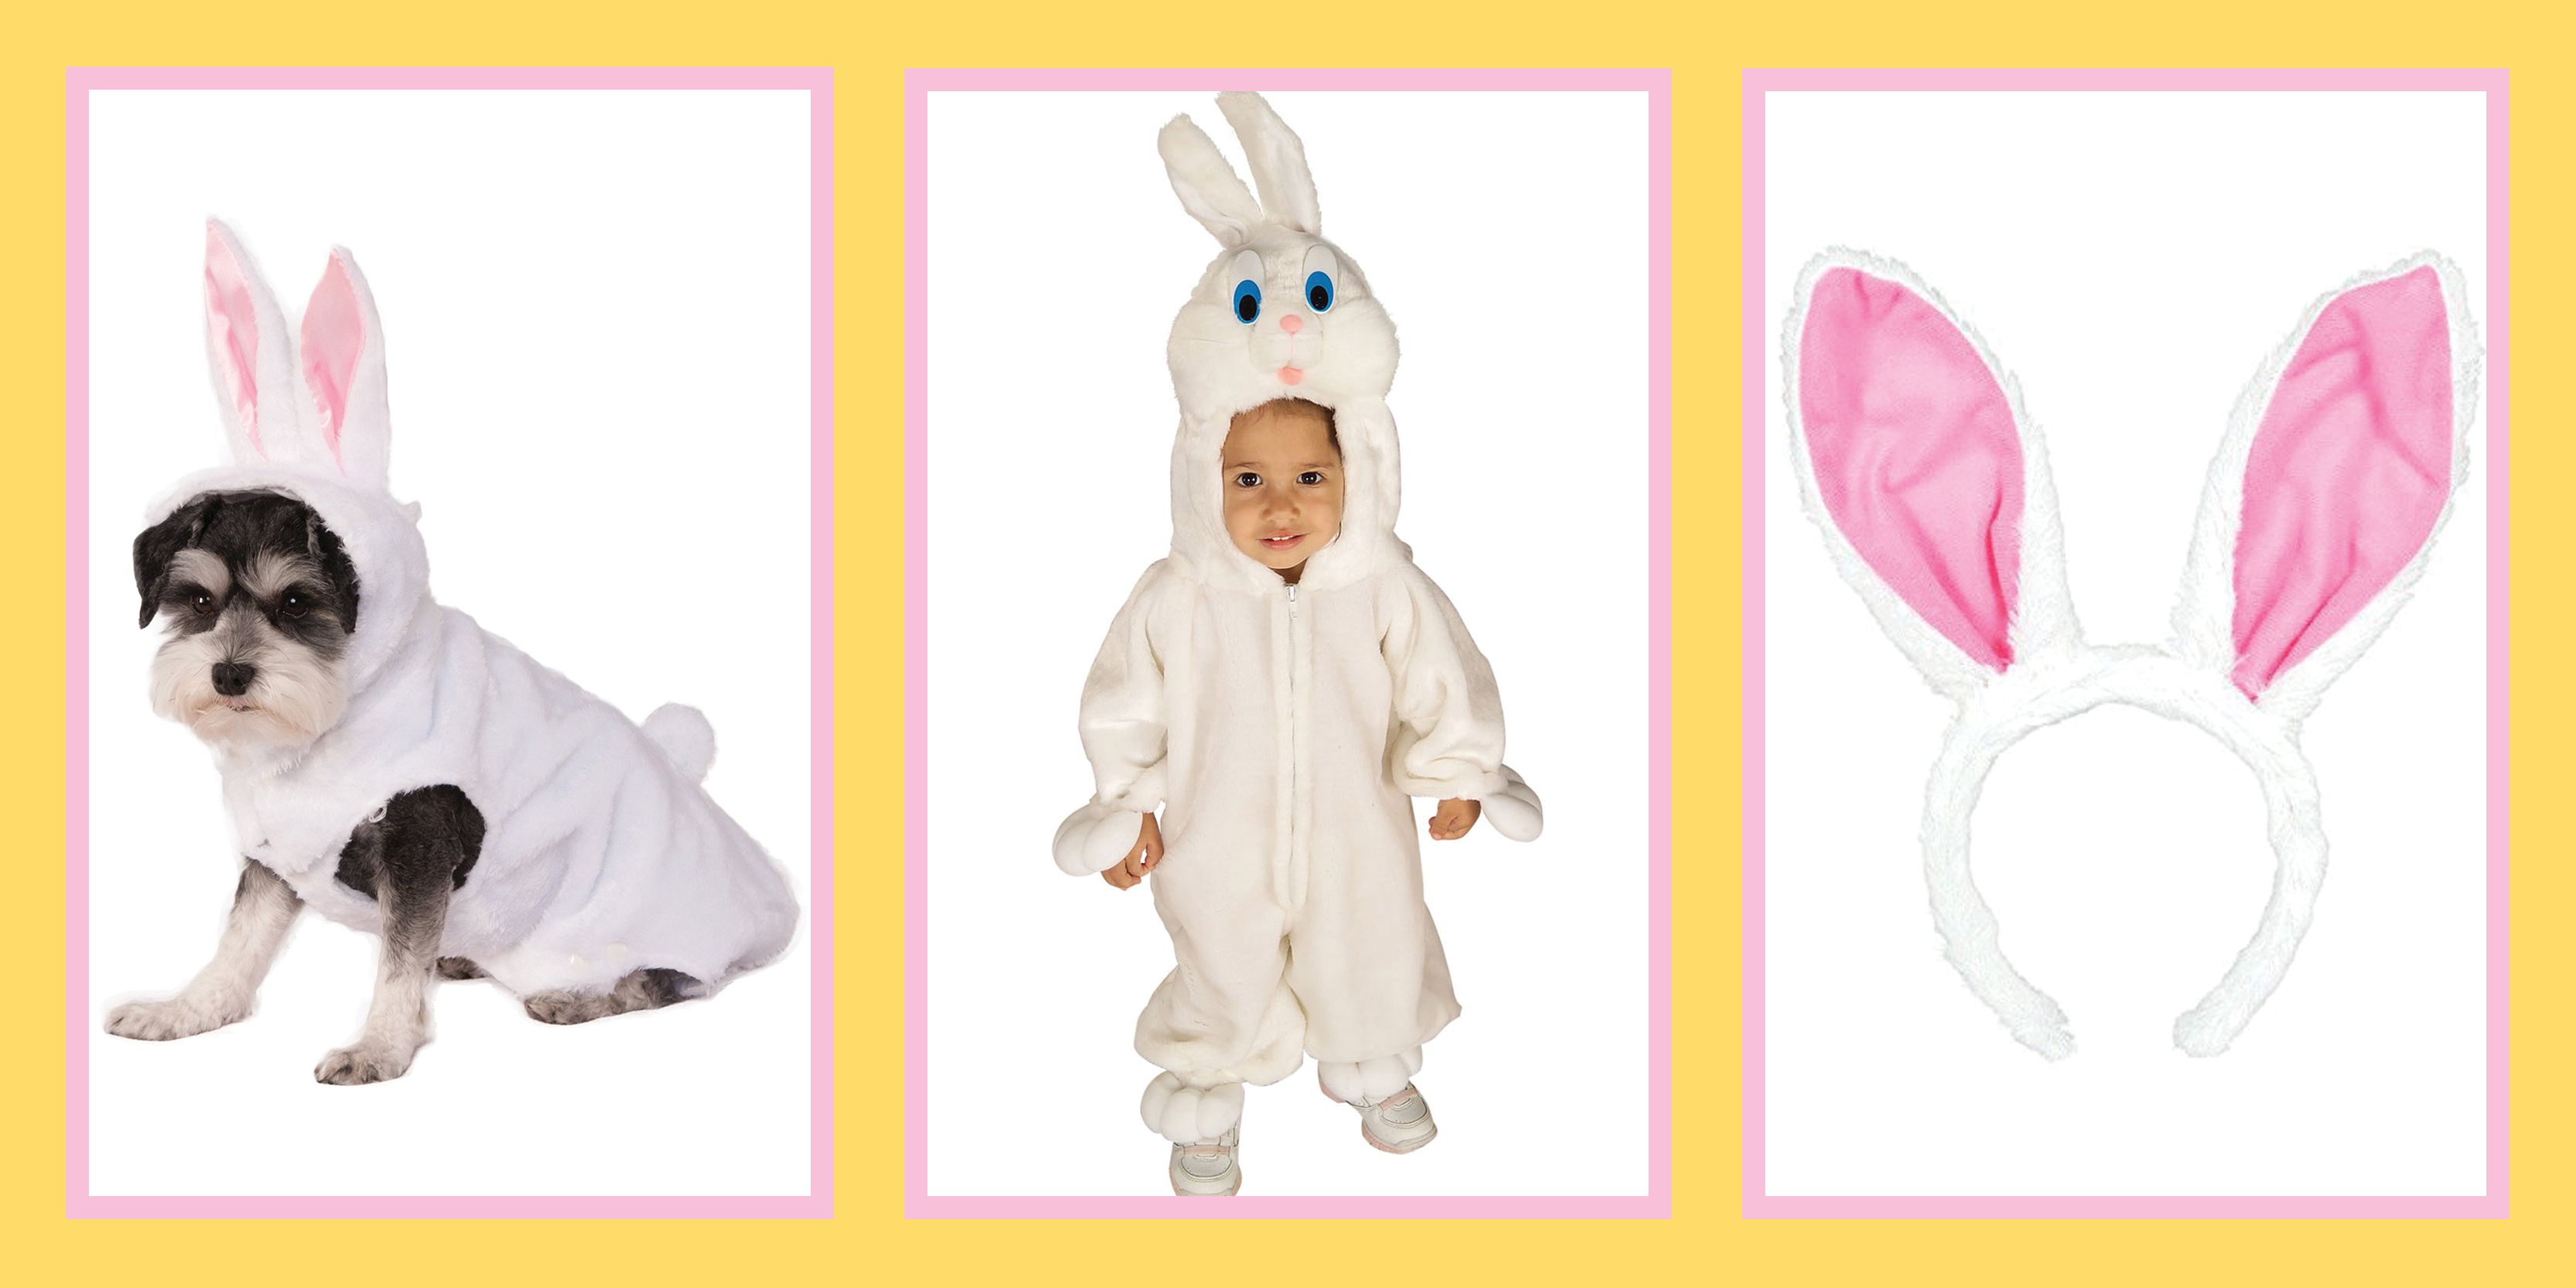 Brown Bunny Costume for Kids - Halloween Costume Ideas